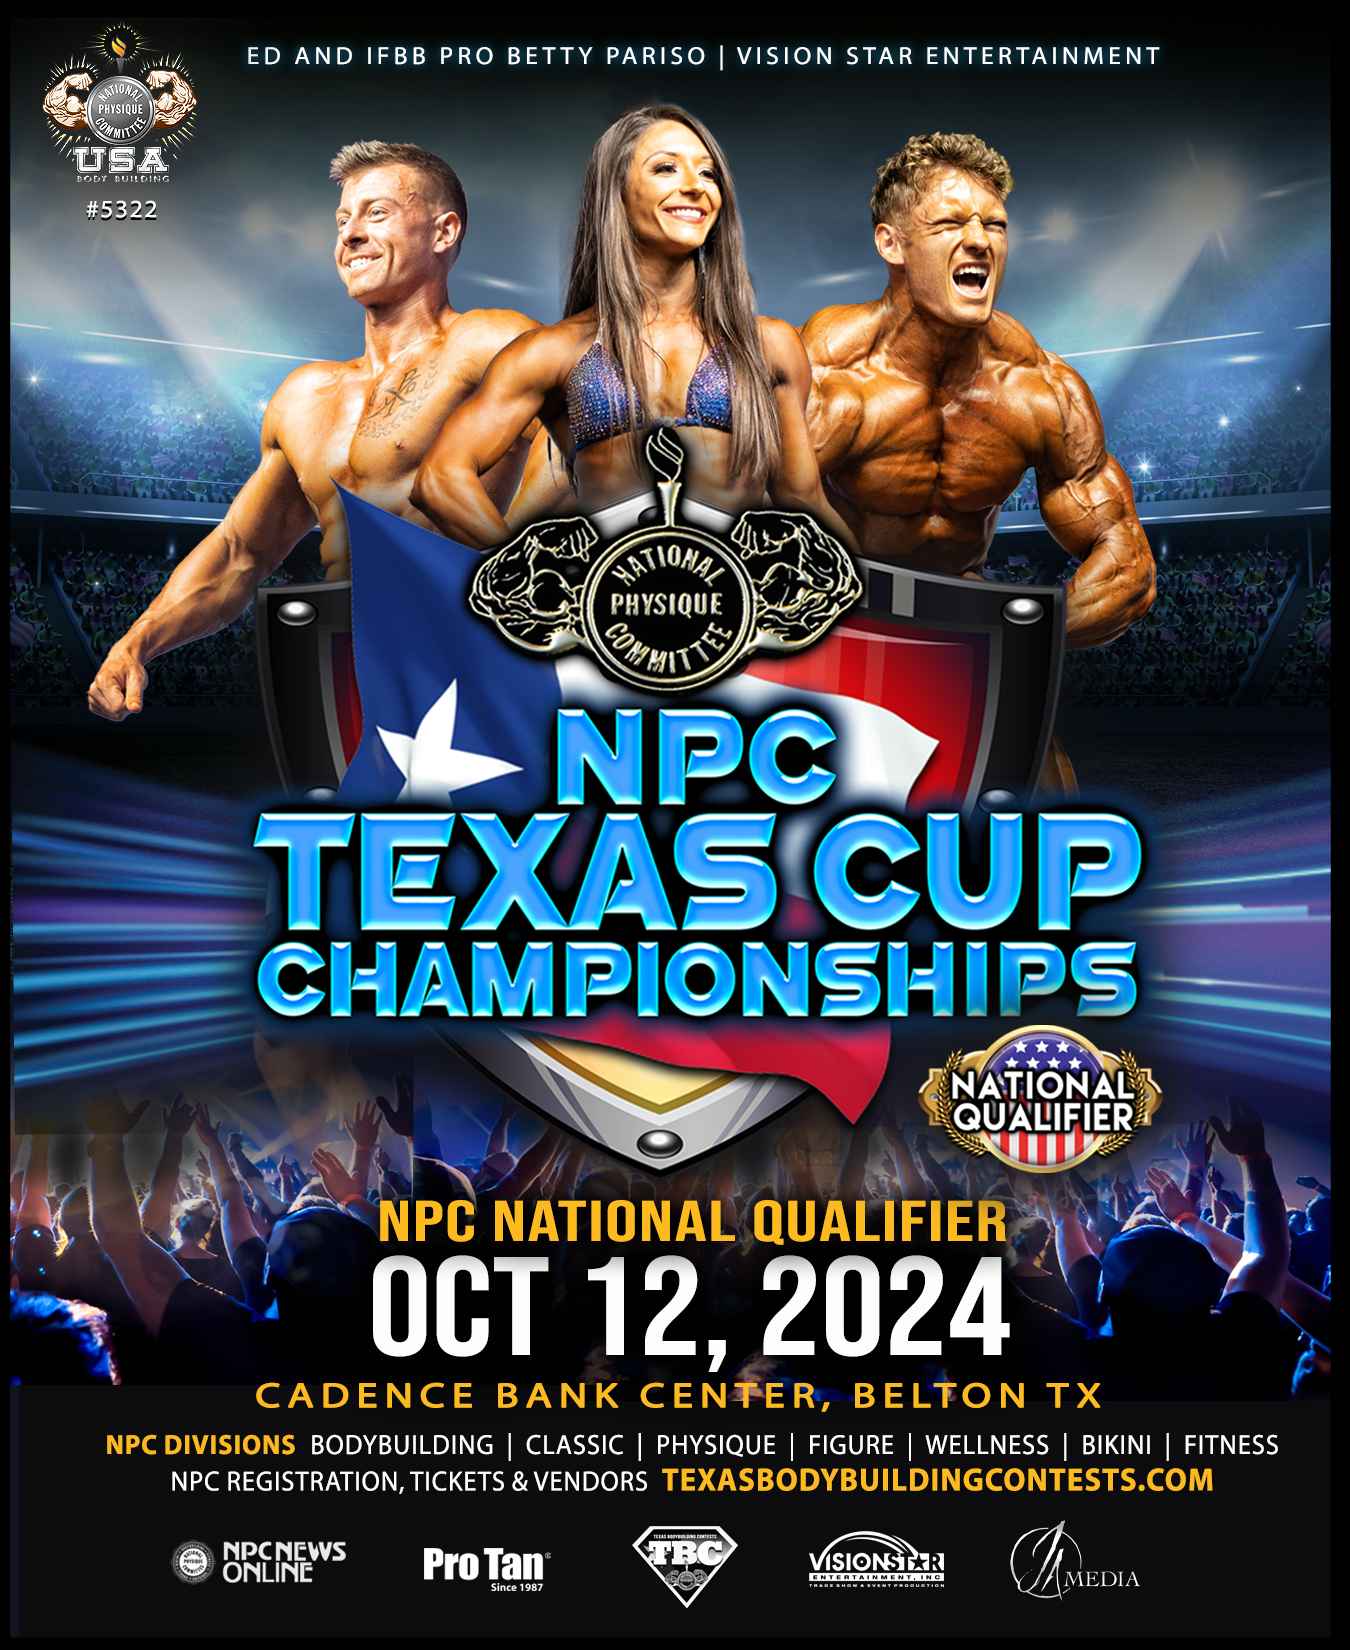 NPC Texas Cup Championships Hair and Make-Up